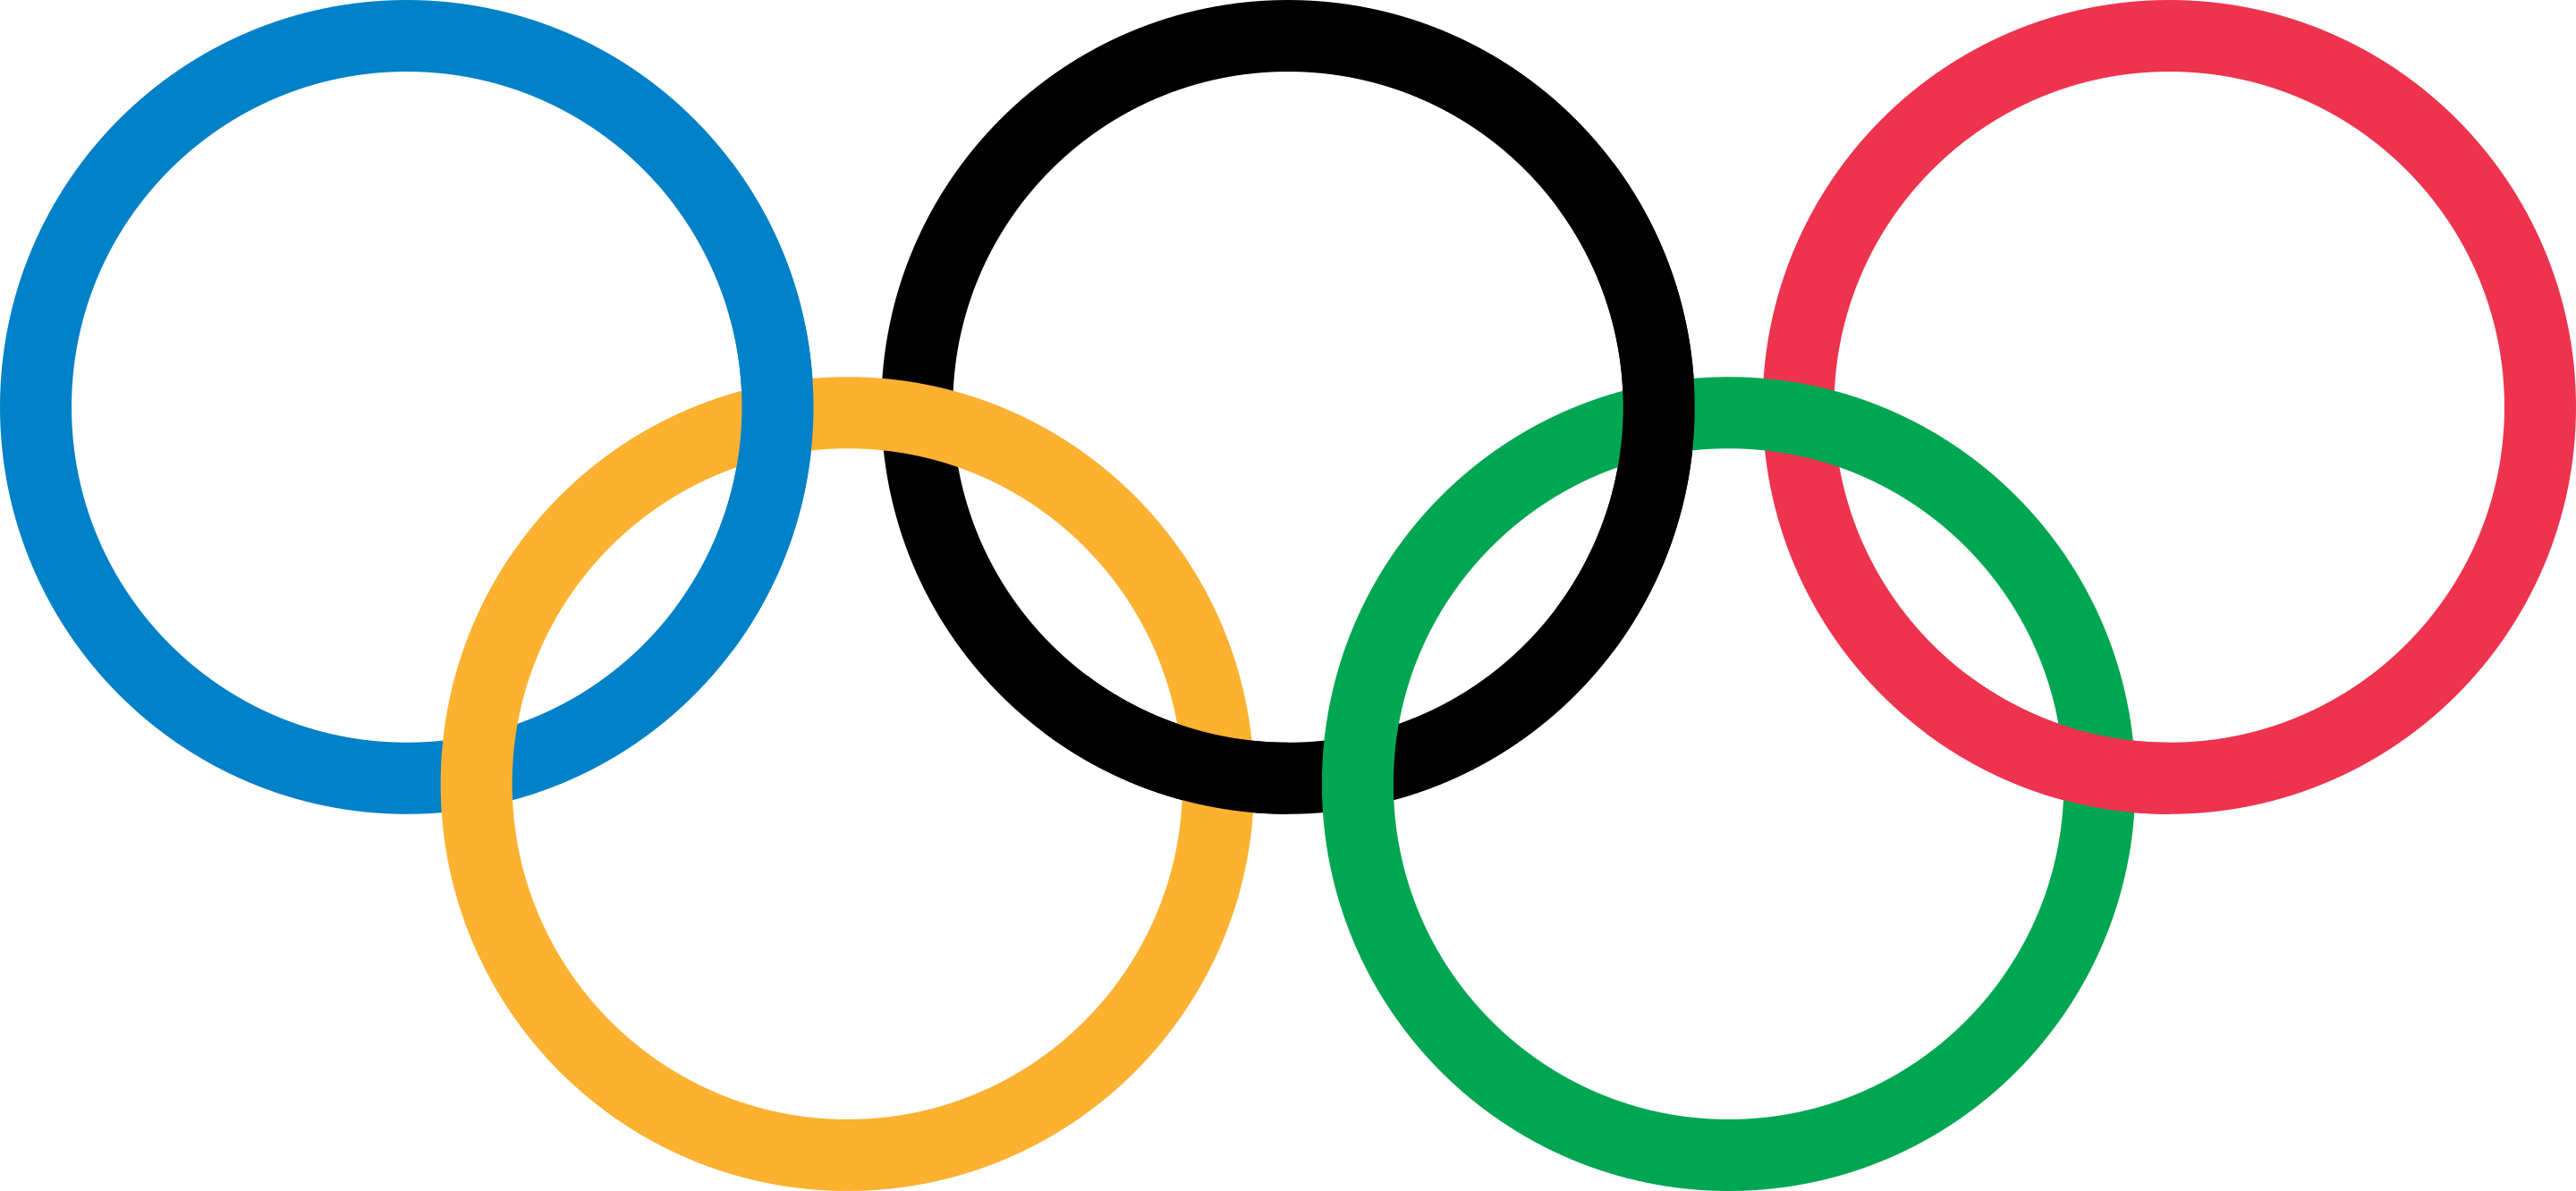 МОК - Олимпийские игры - Олимпиады - Olympic Games